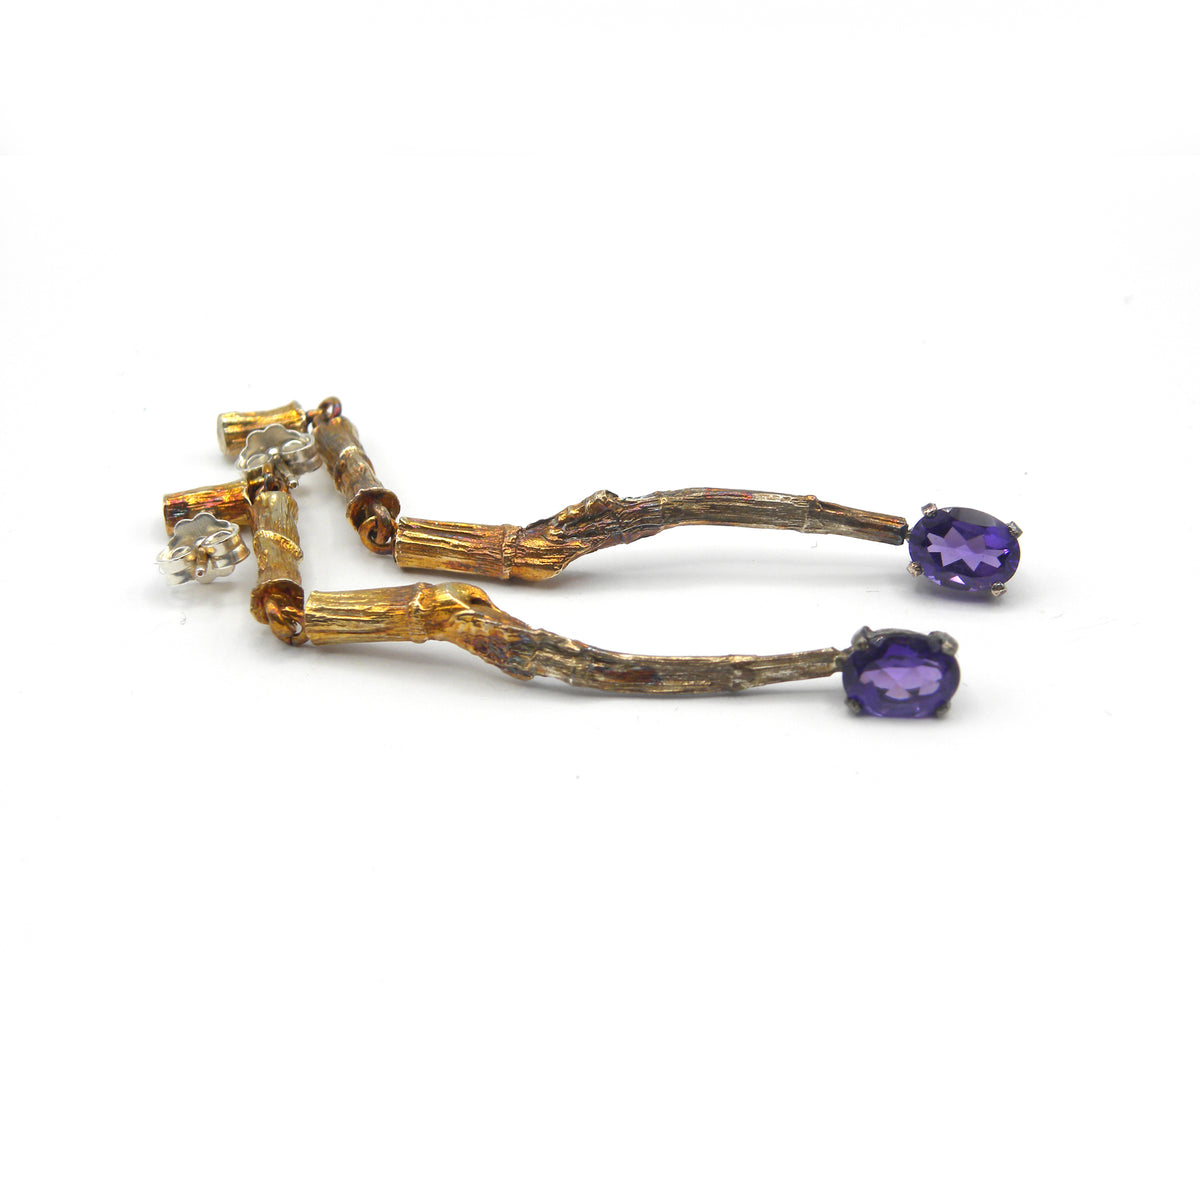 Purple quartz and branch earrings